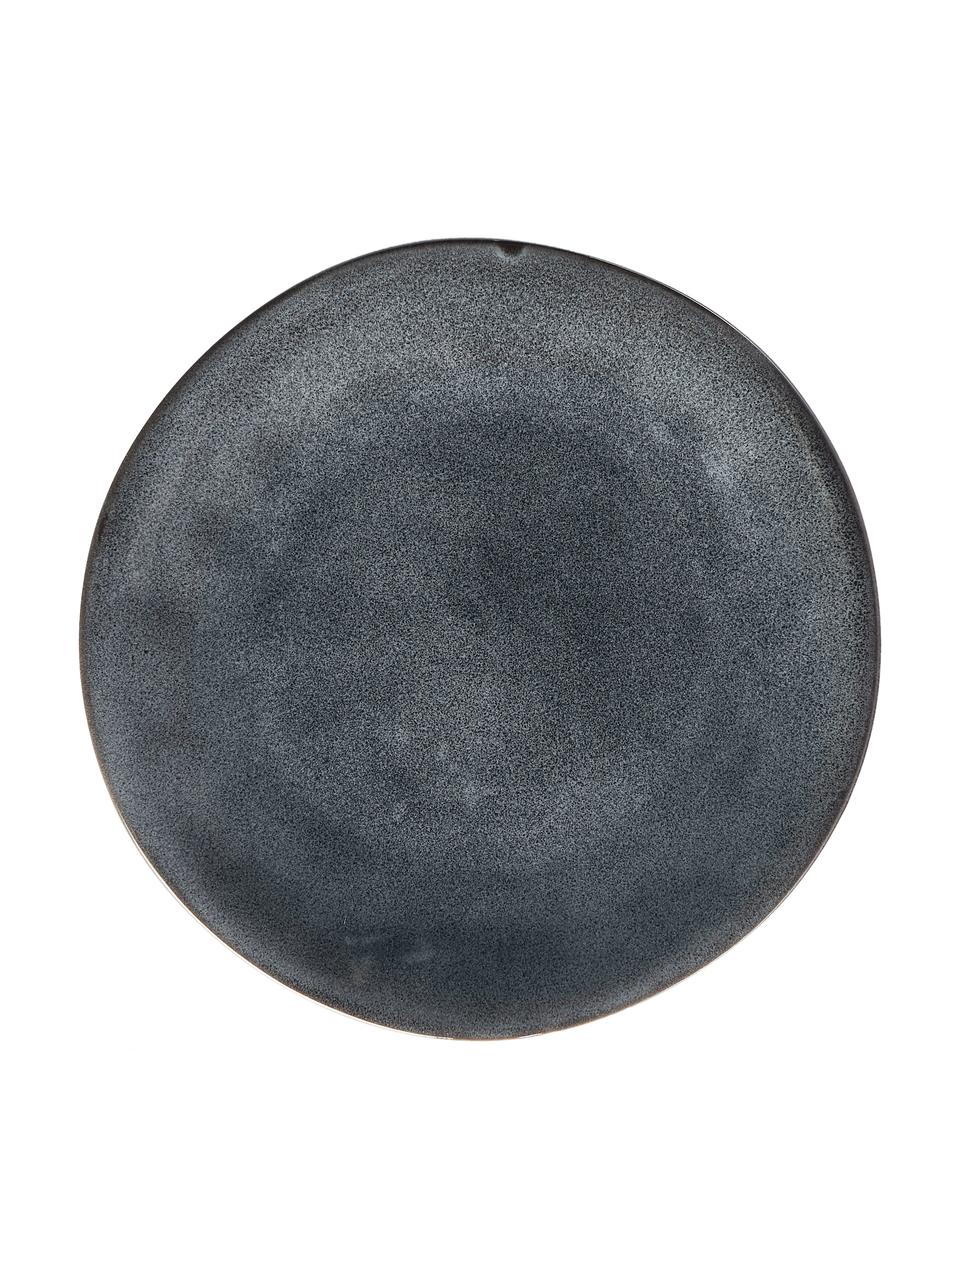 Kameninový snídaňový talíř Pauline, 2 ks, Kamenina, Tmavě šedá, Ø 21 cm